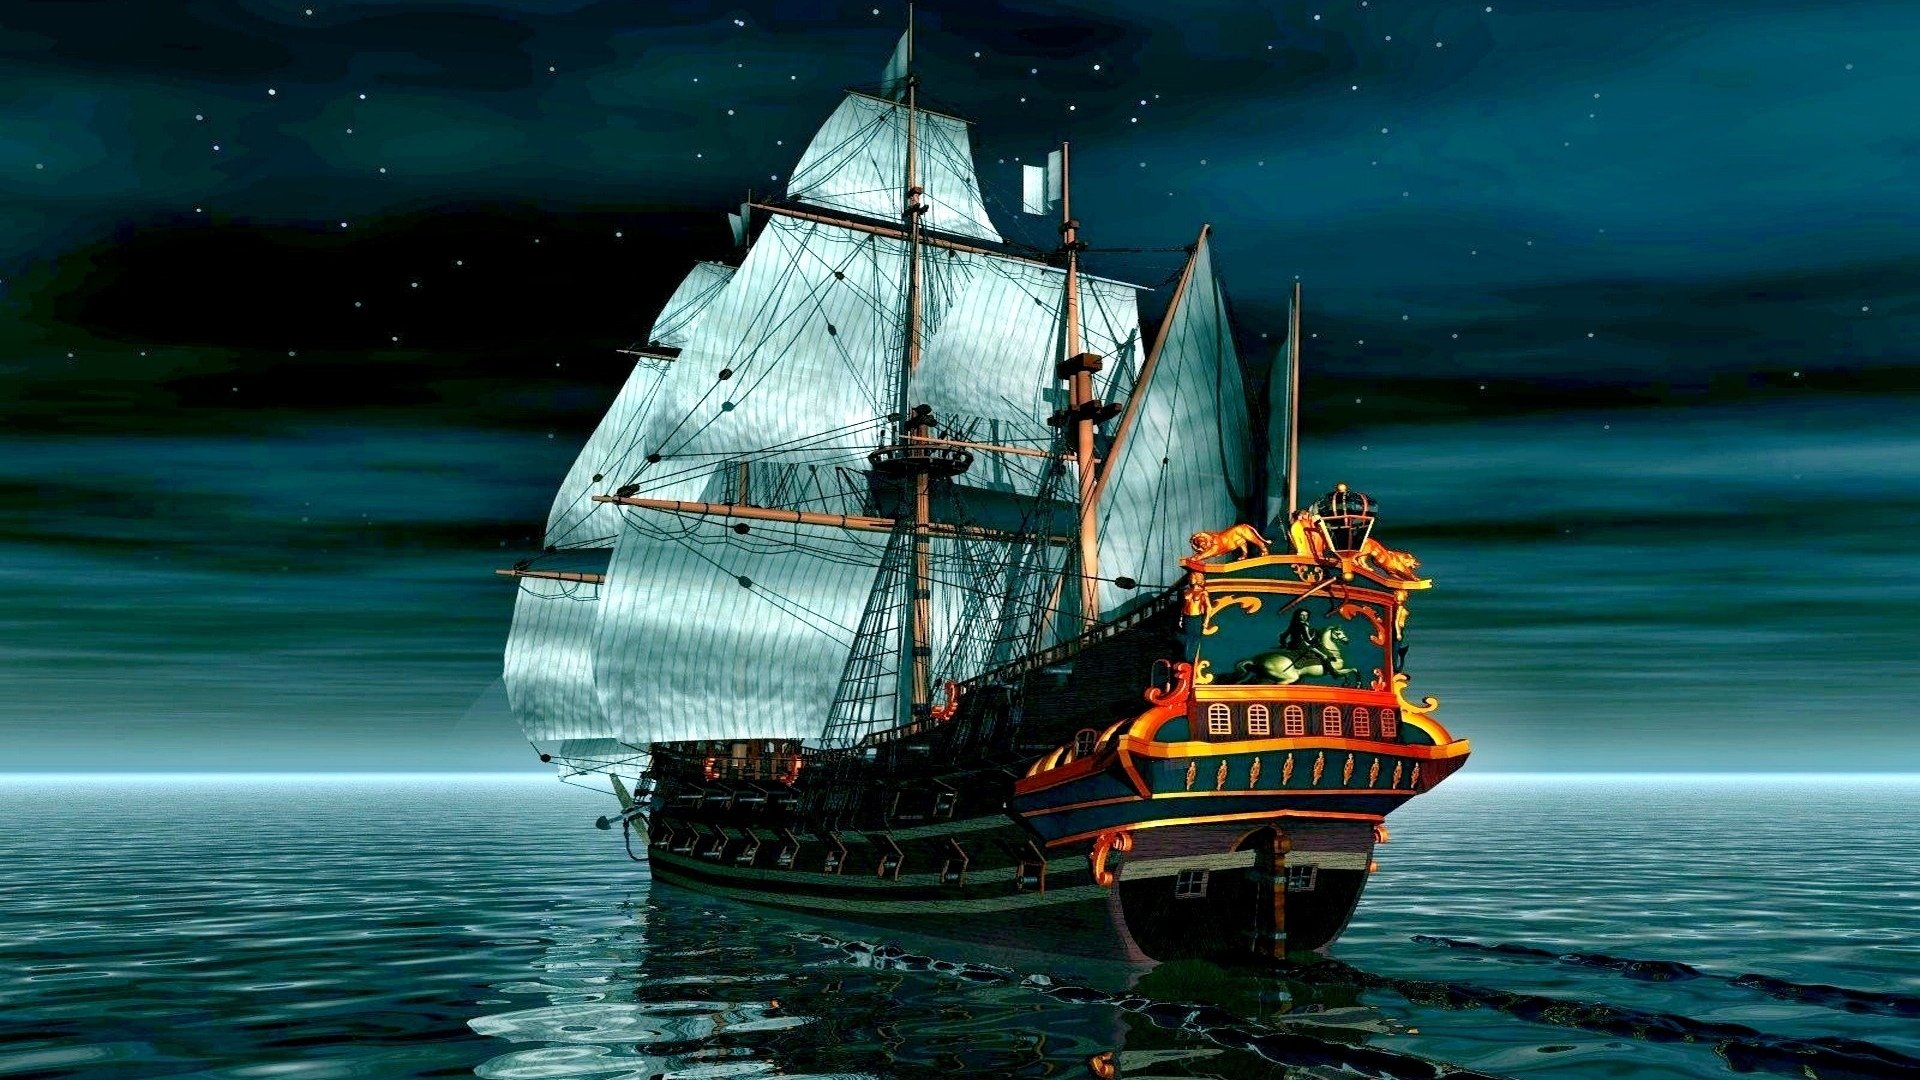 wallpaper ship sea,vehicle,fluyt,manila galleon,galleon,sailing ship